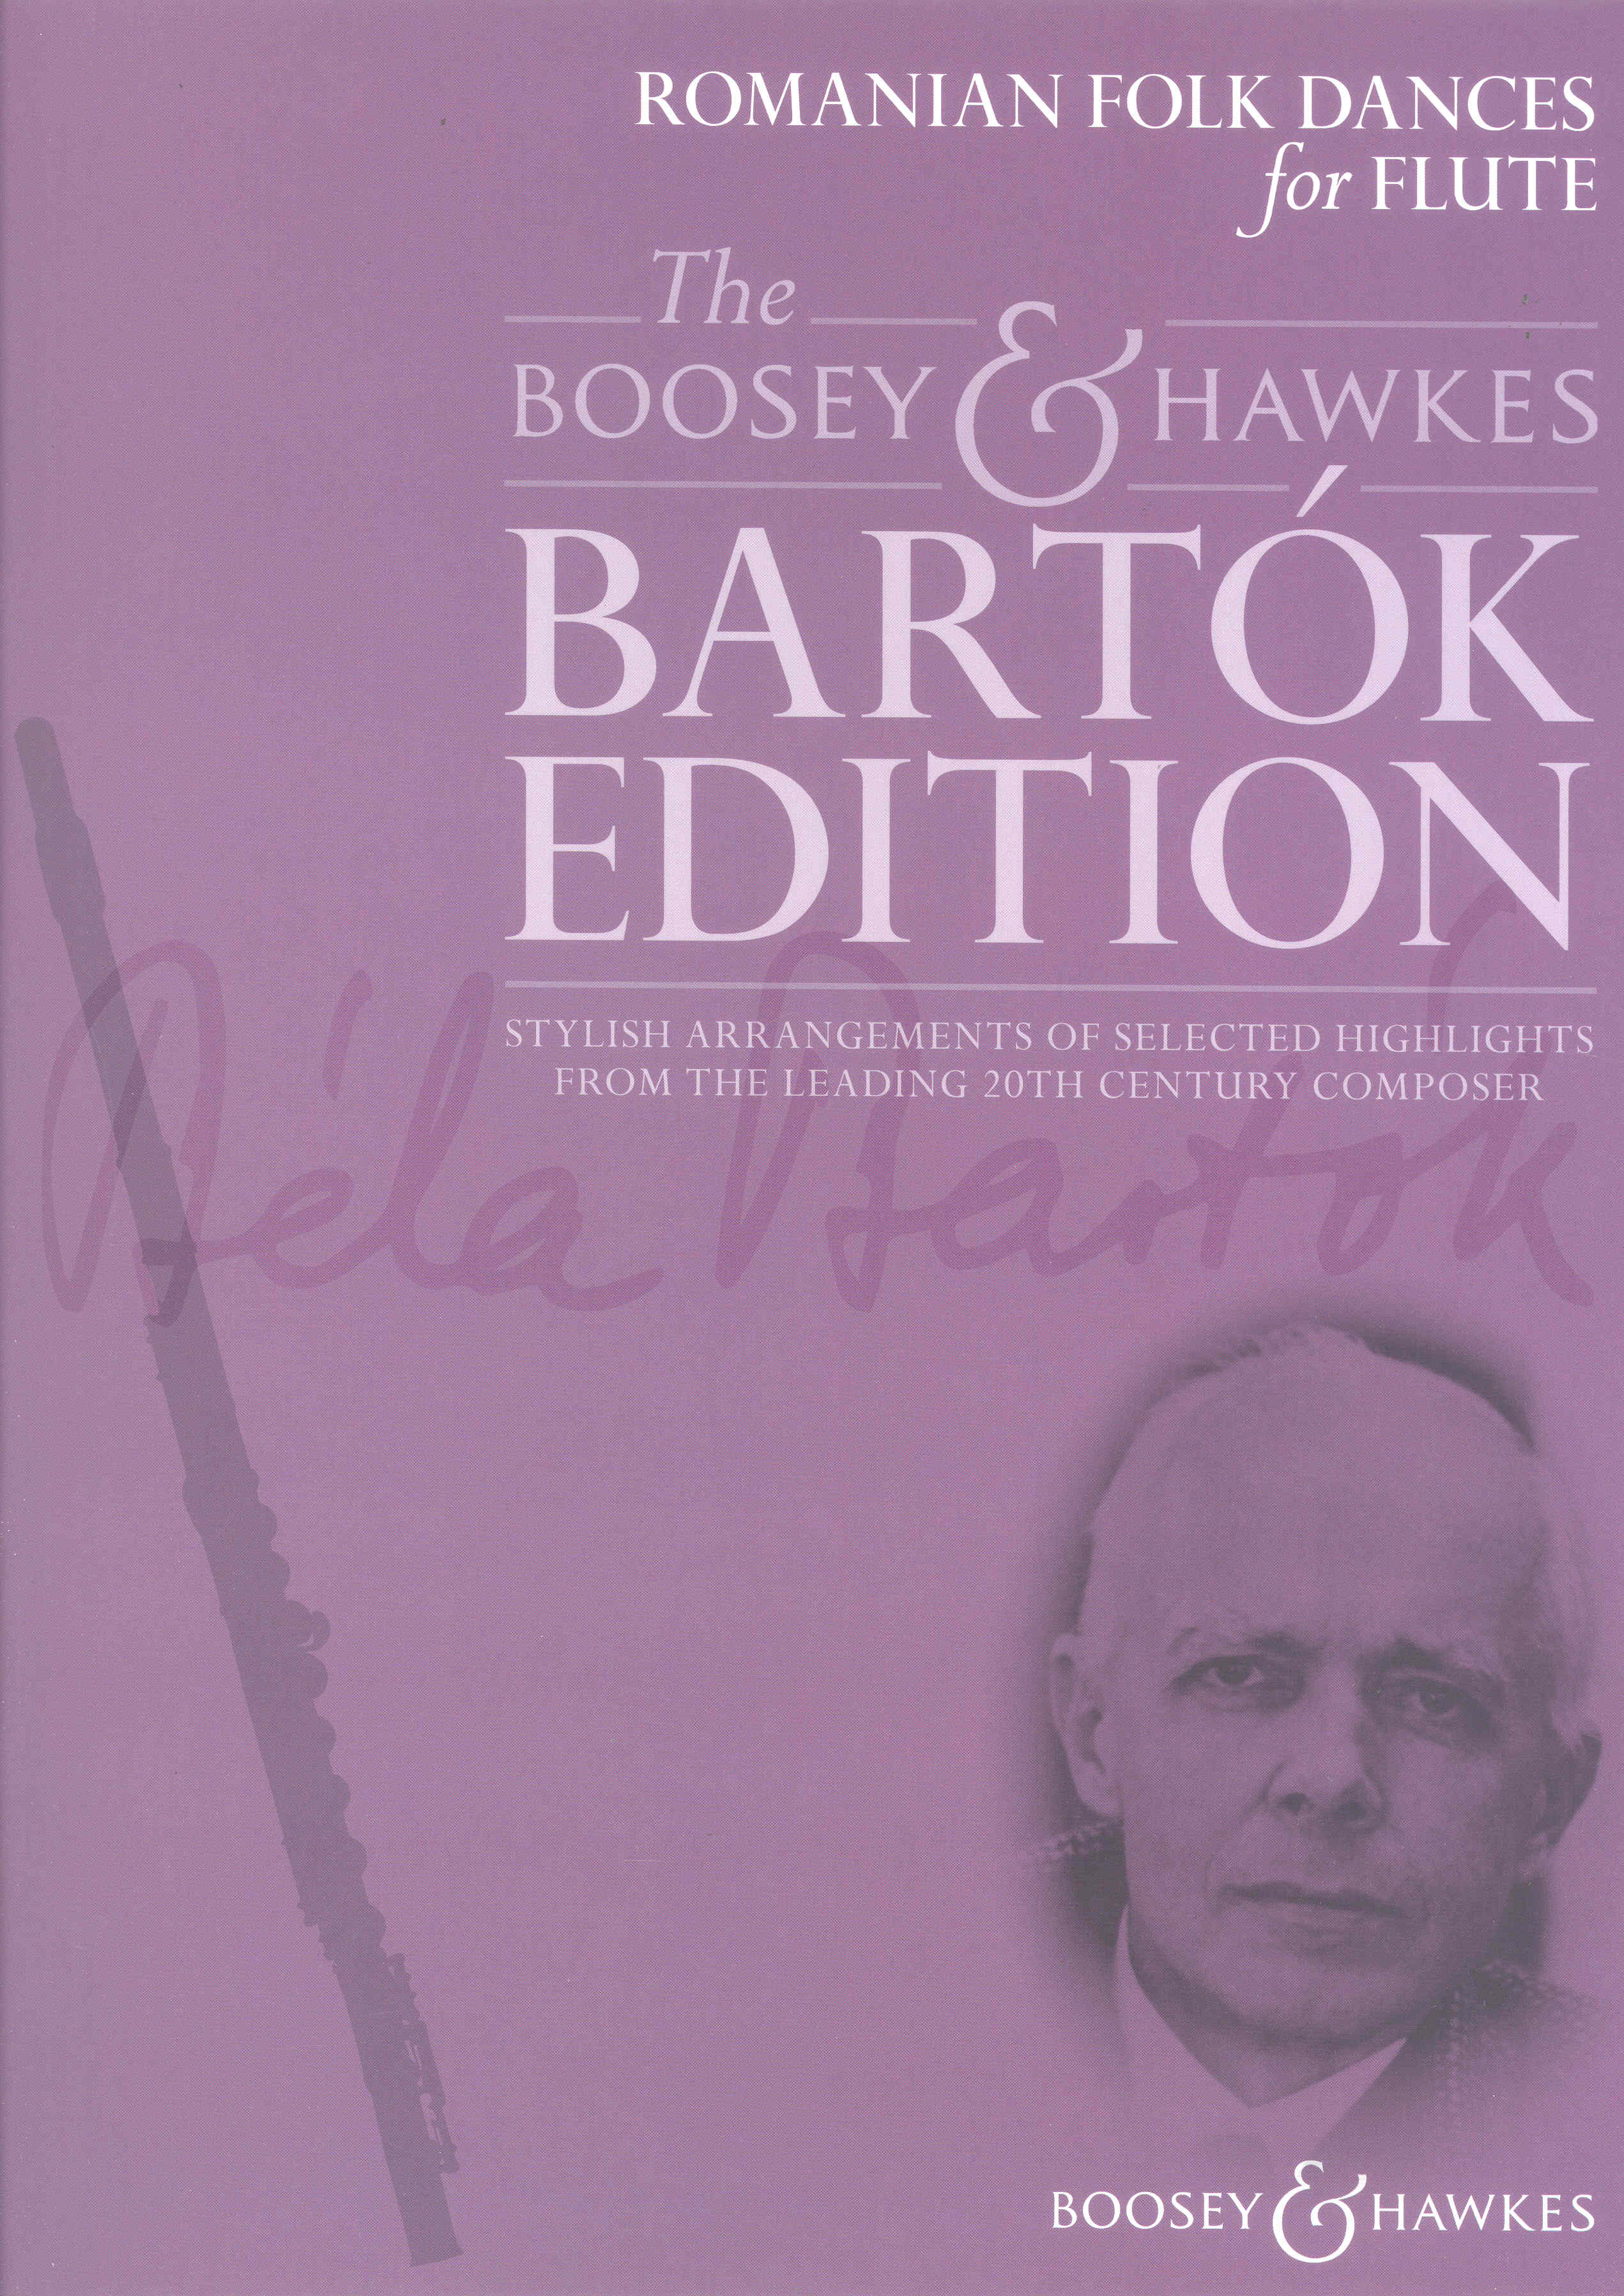 Bartok Edition Romanian Folk Dances Flute Sheet Music Songbook